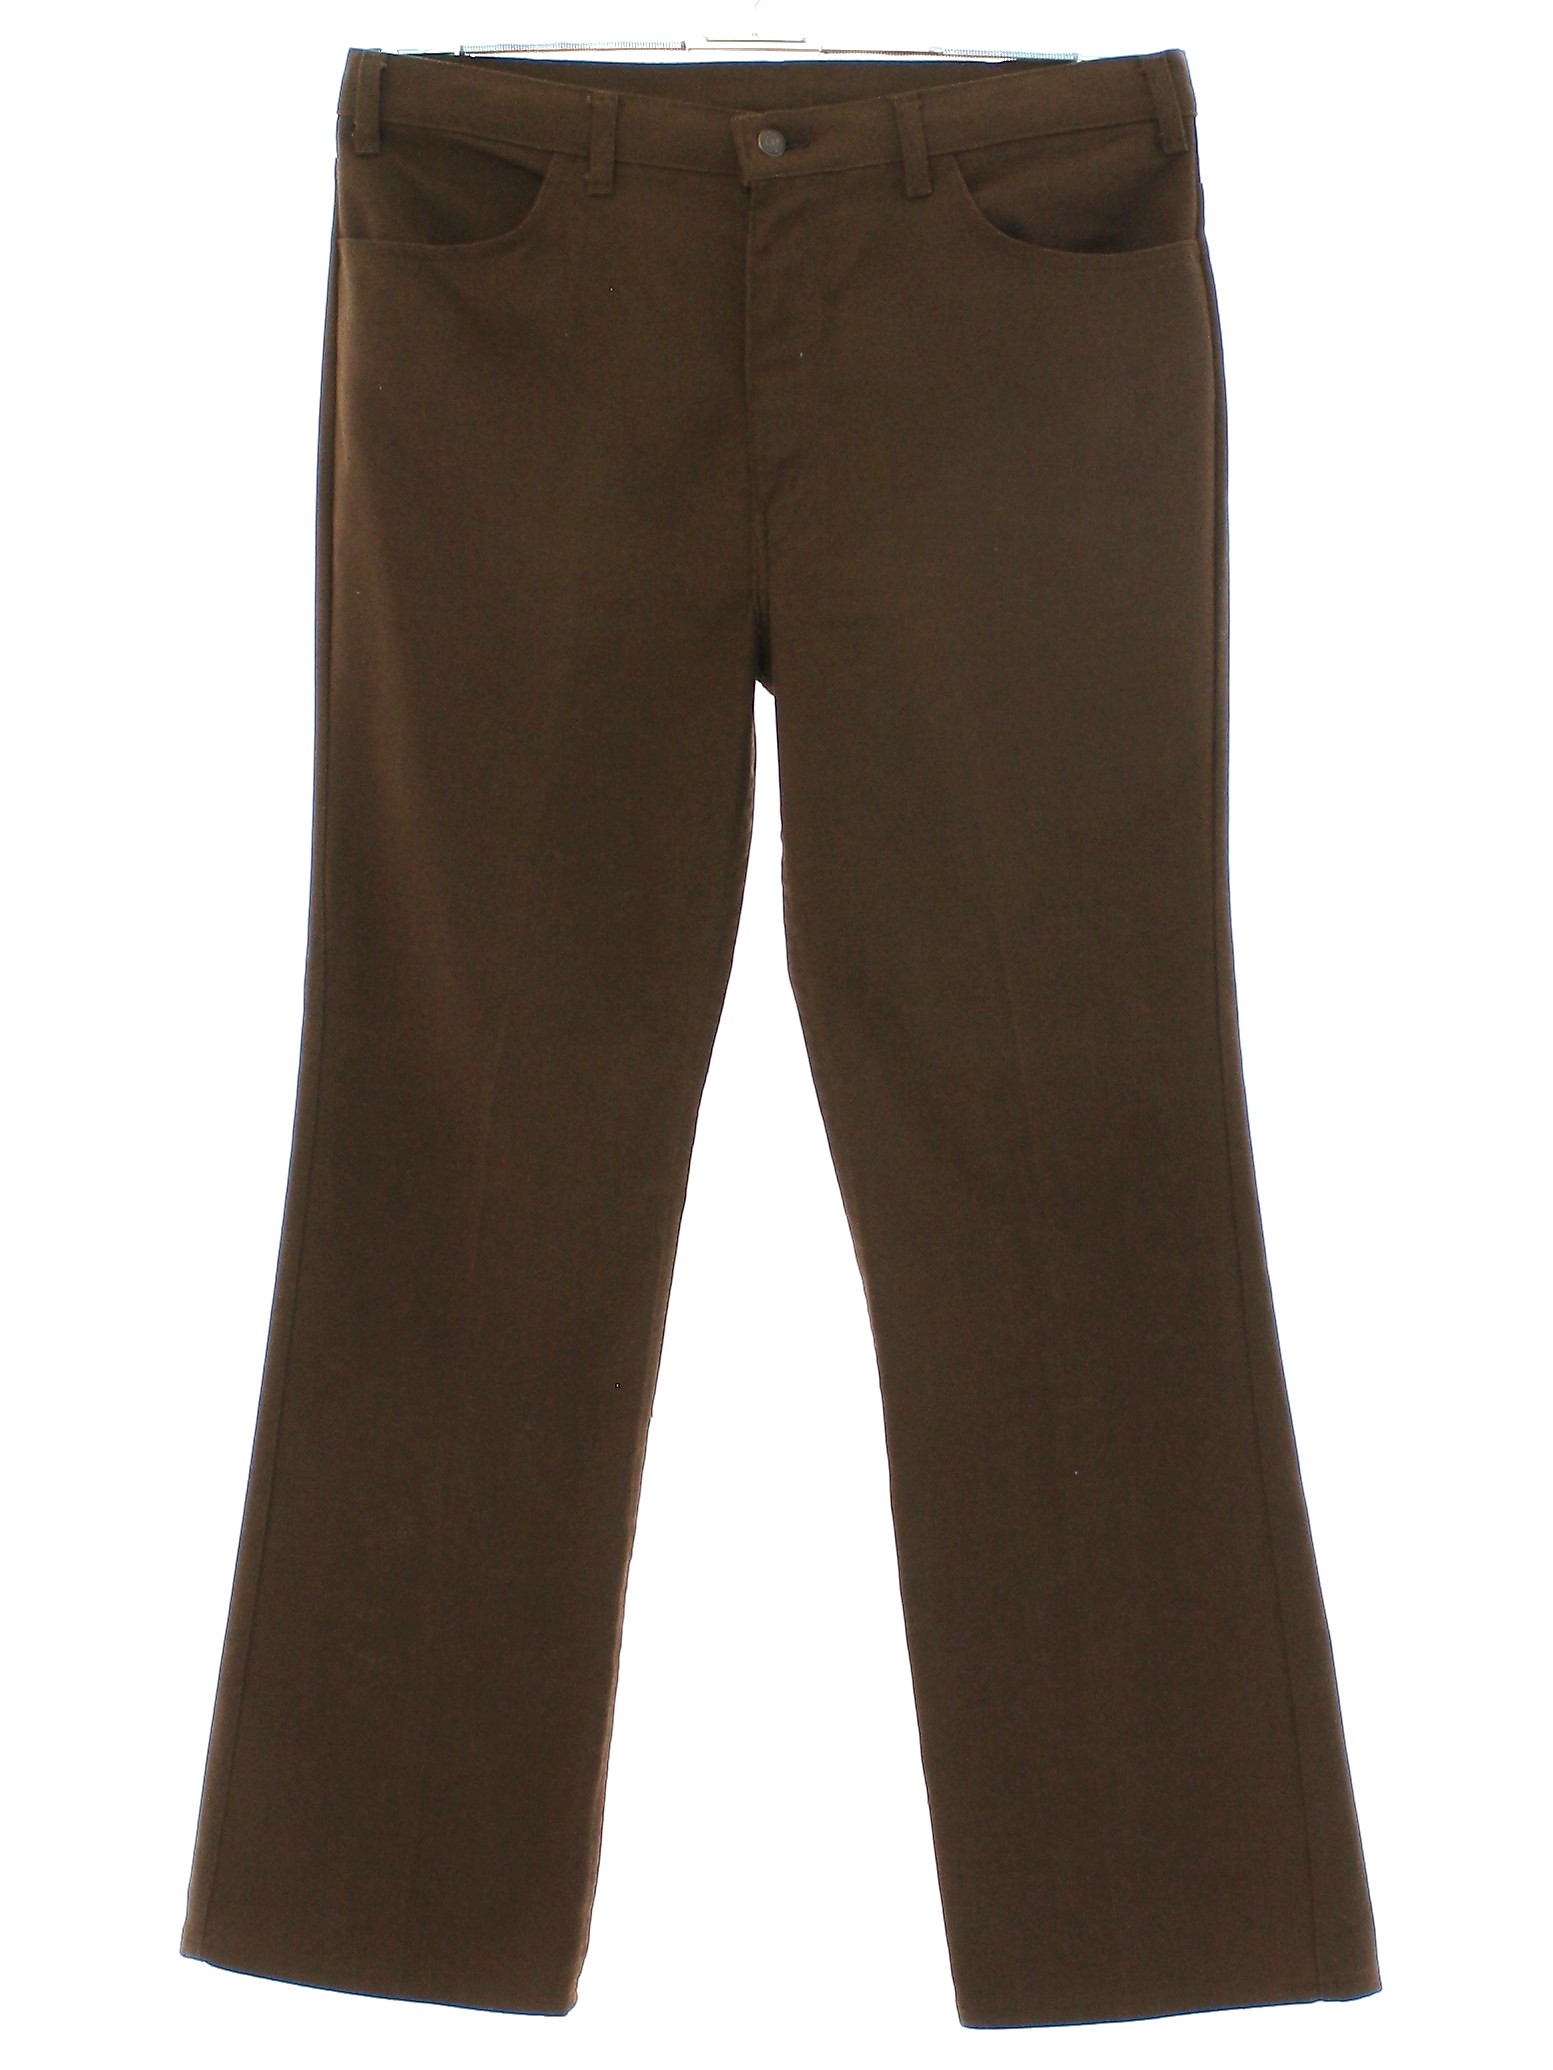 Levis Seventies Vintage Flared Pants / Flares: 70s -Levis- Mens brown ...